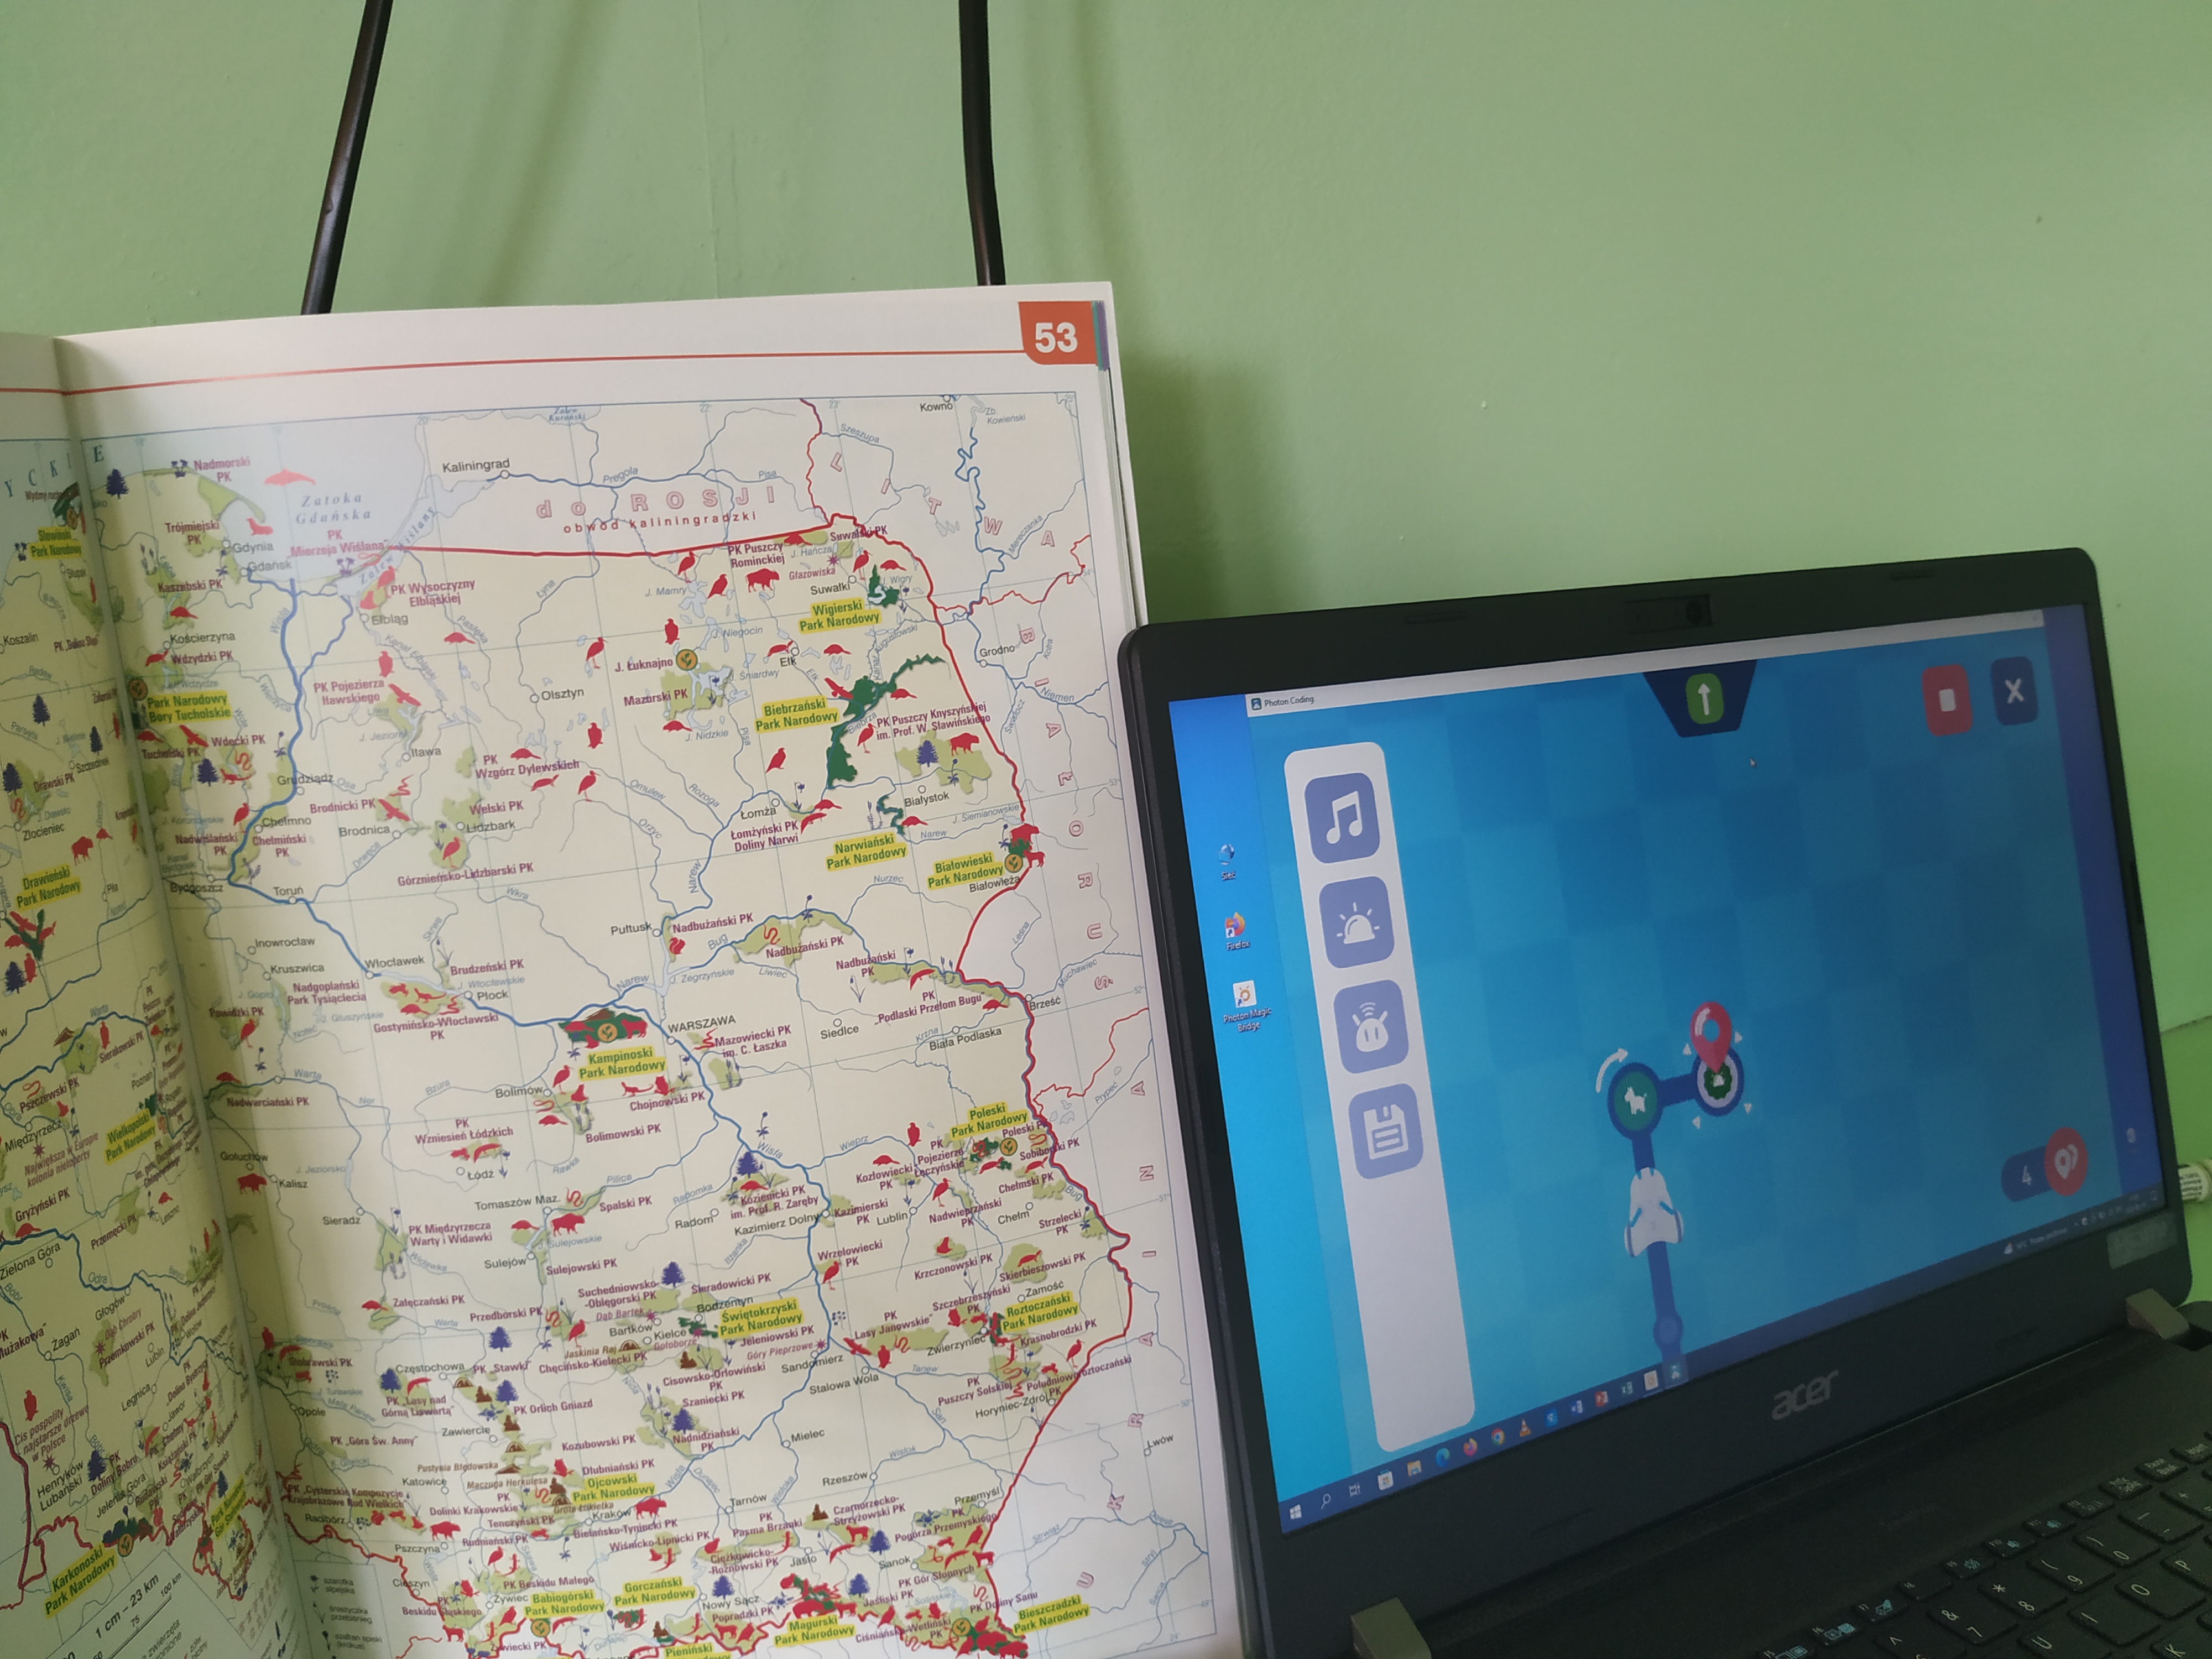  widoczna mapa Polski i komputer z trasą robota